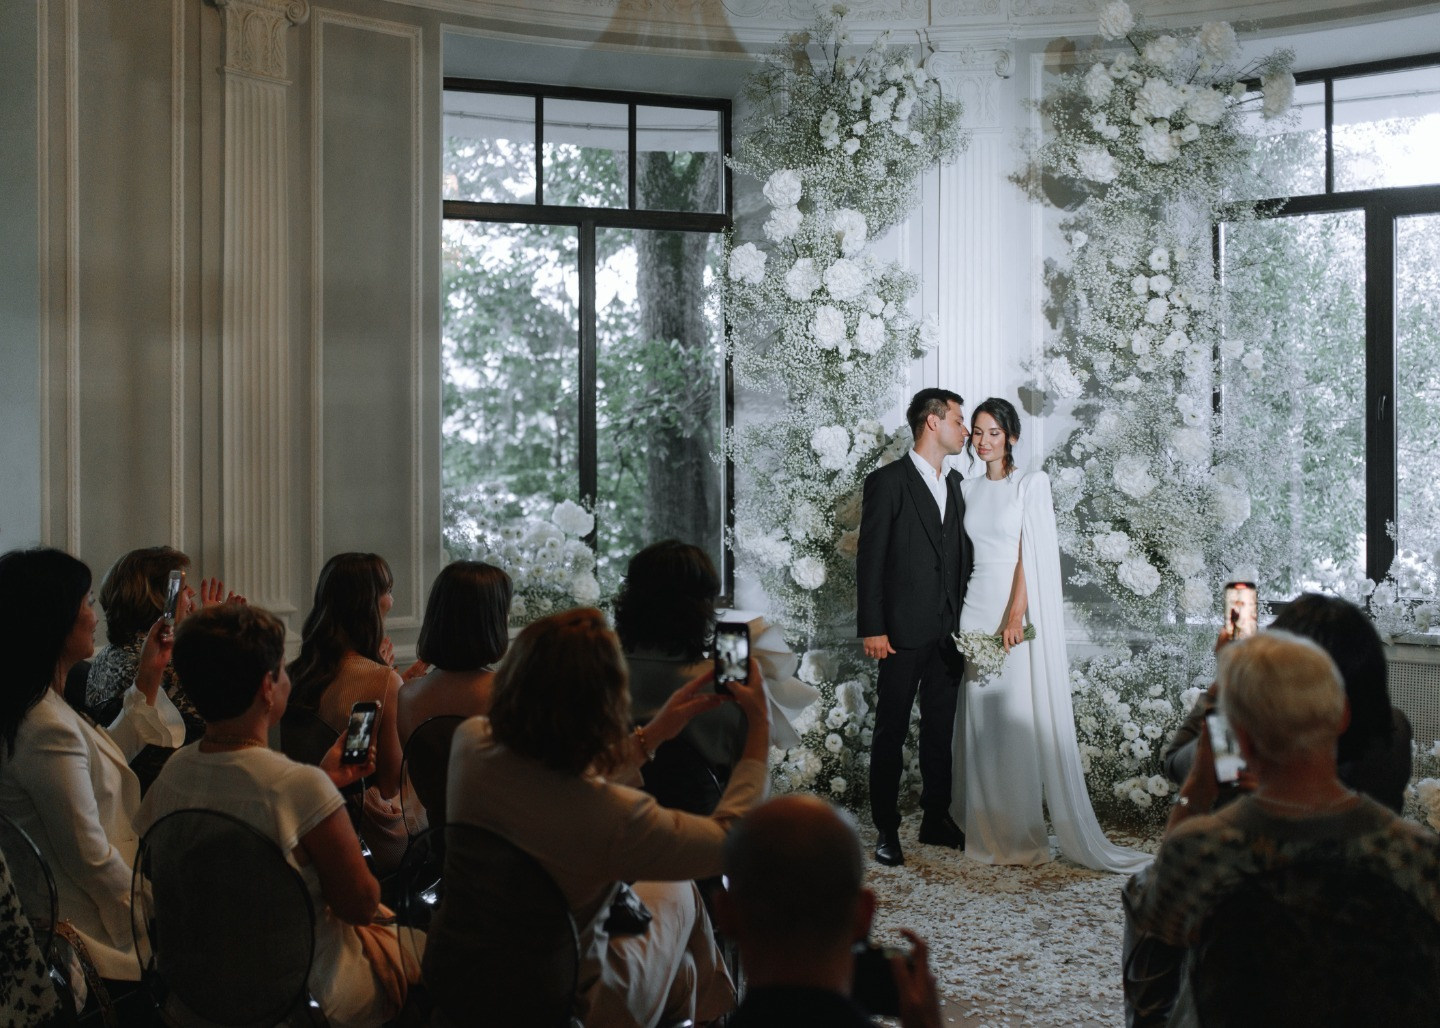 White minimalism: элегантная стильная свадьба